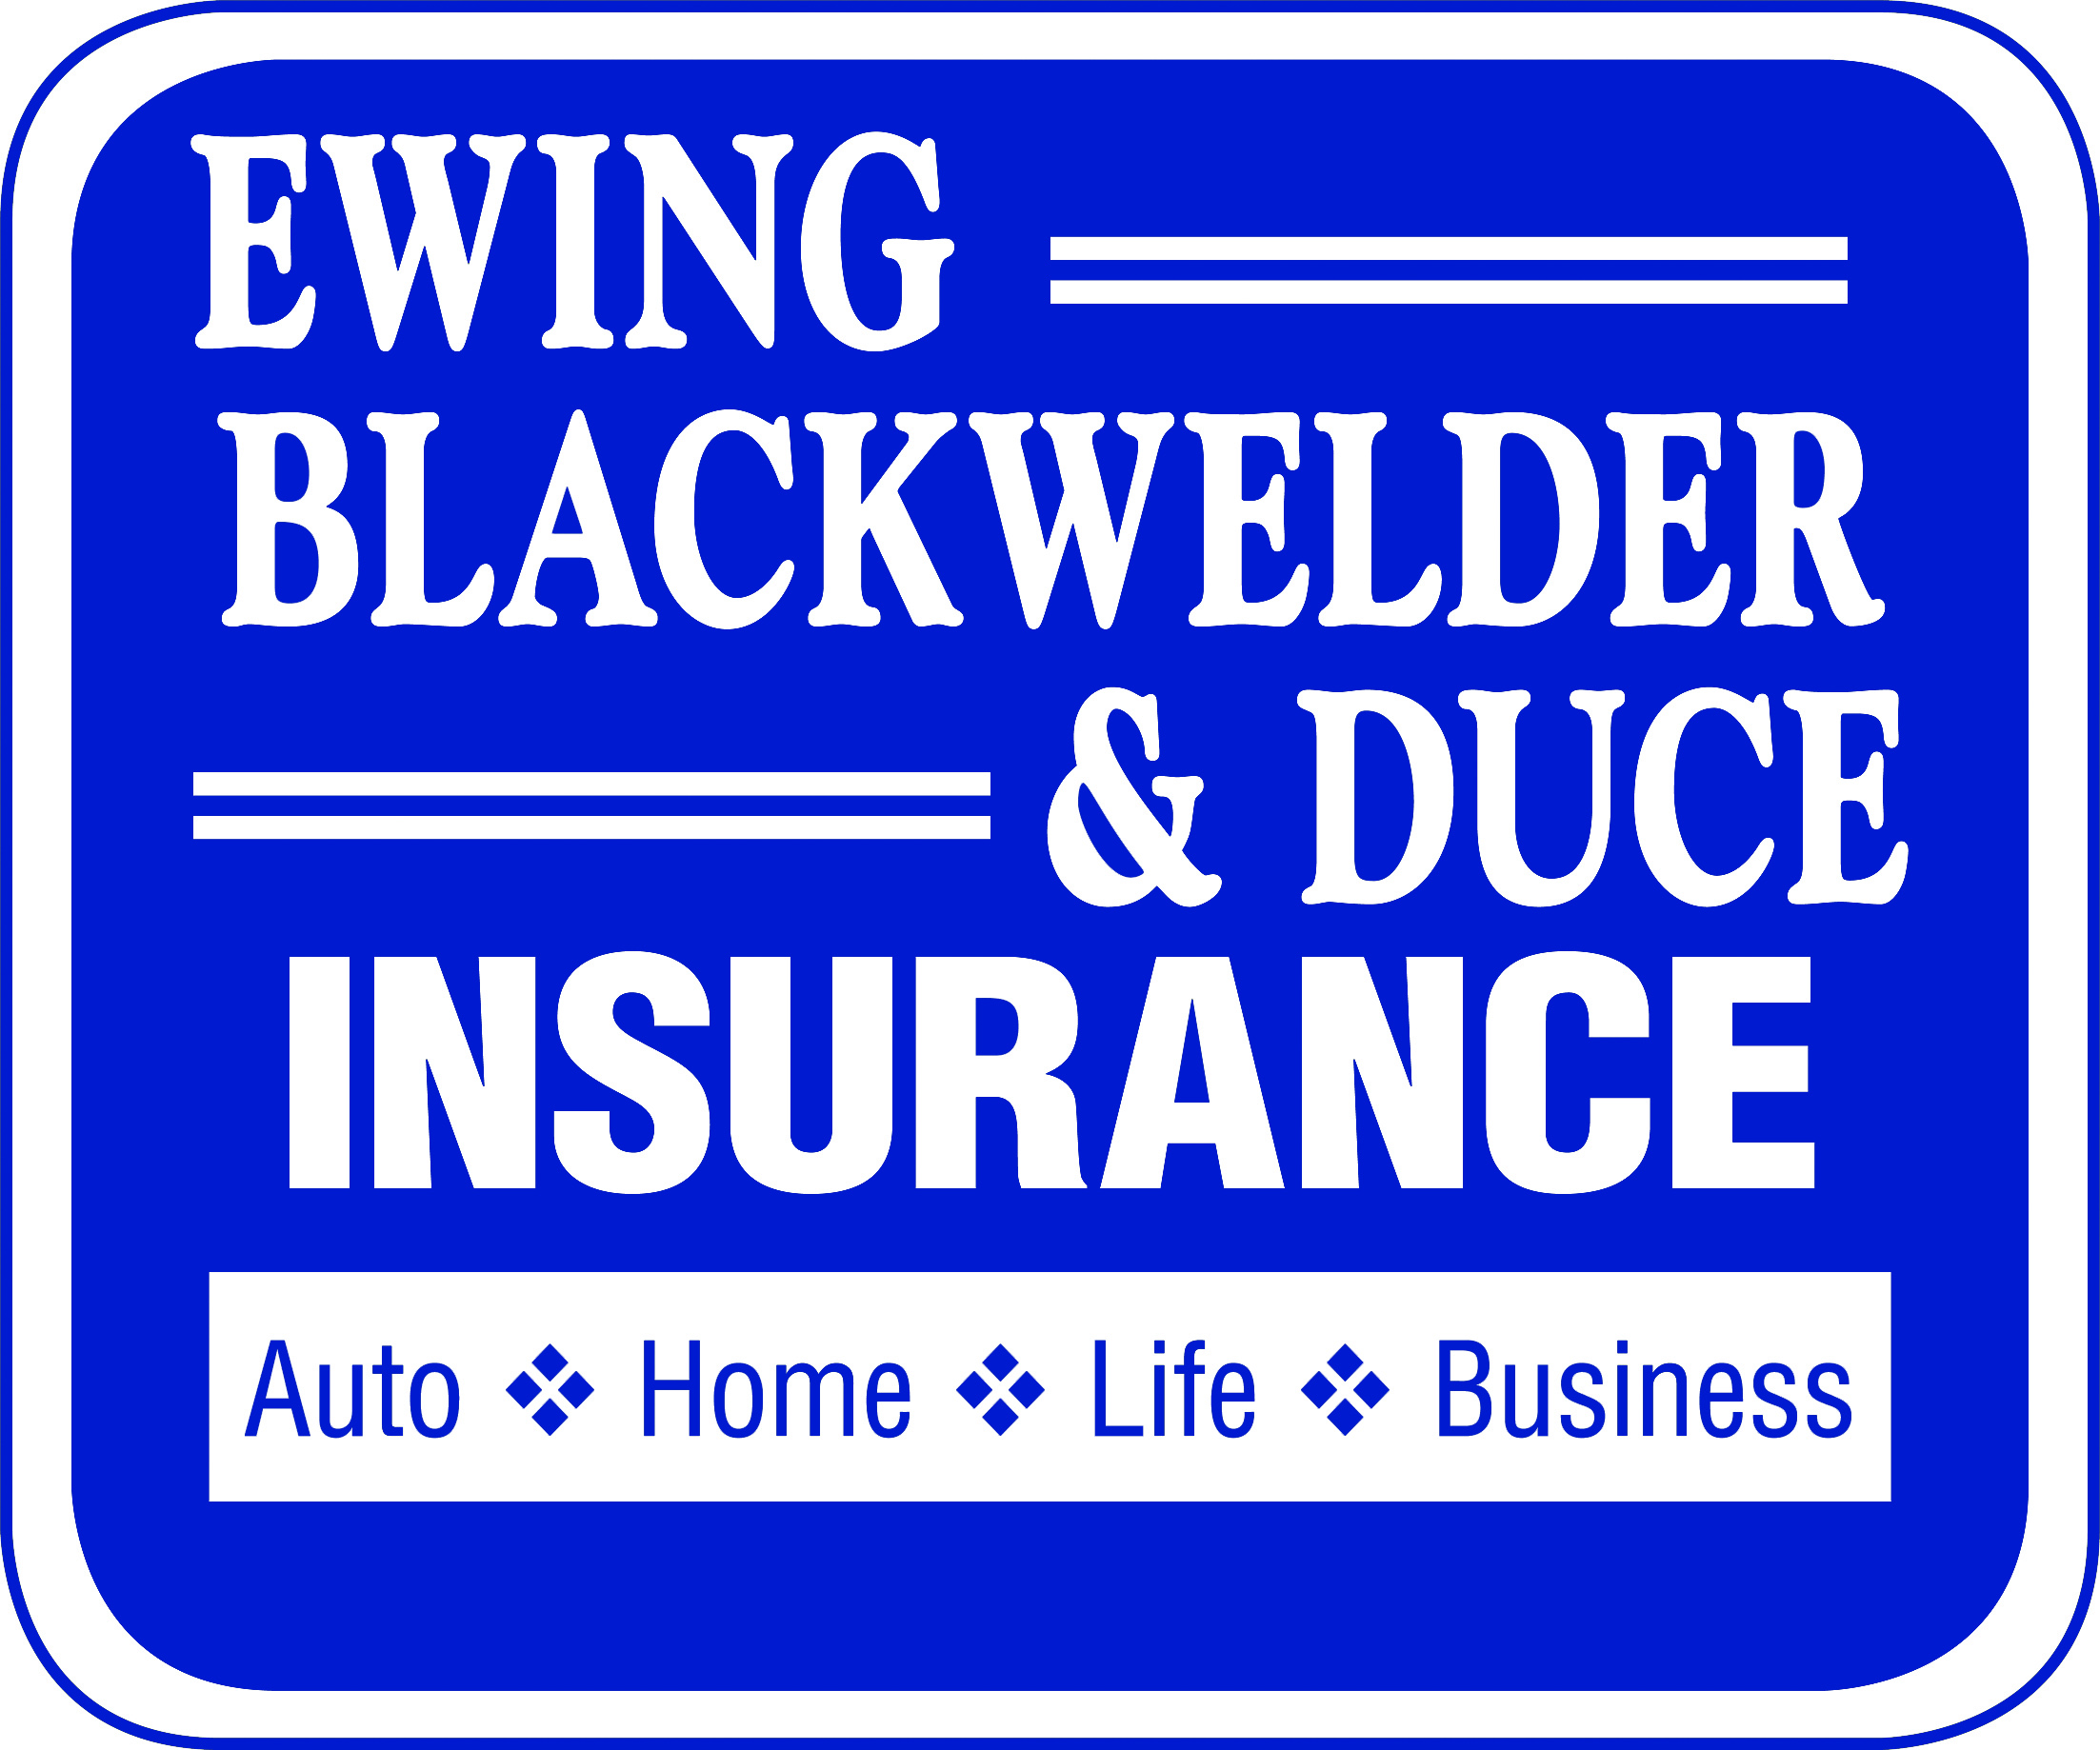 Ewing, Blackwelder & Duce Insurance Inc.'s logo